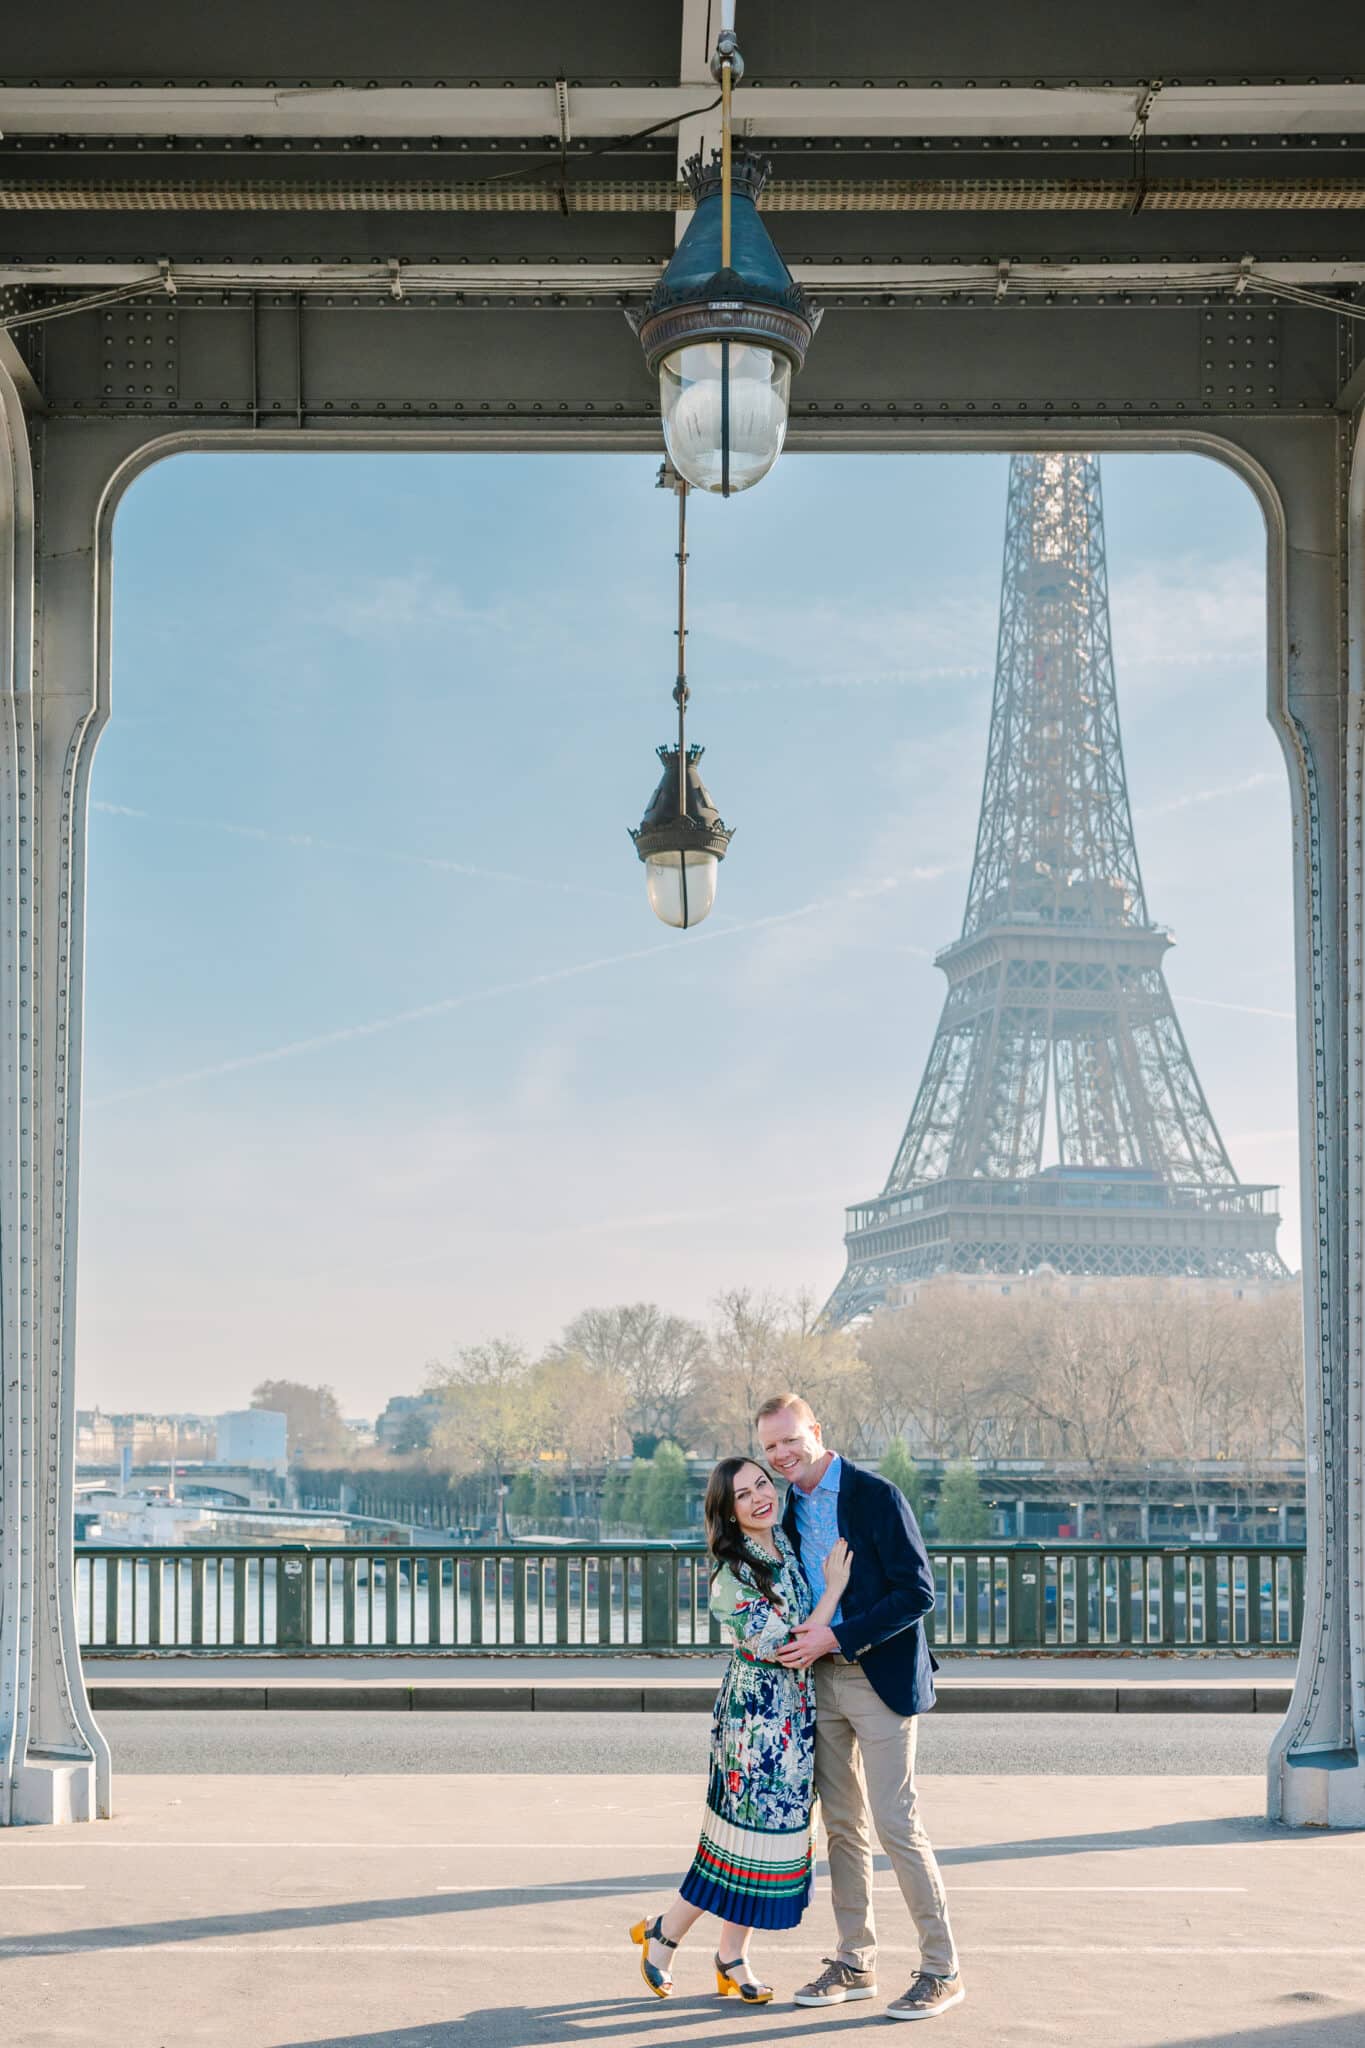 A couple photo shoot in Paris on the Eiffel Tower Bridge taken by Flytographer. 